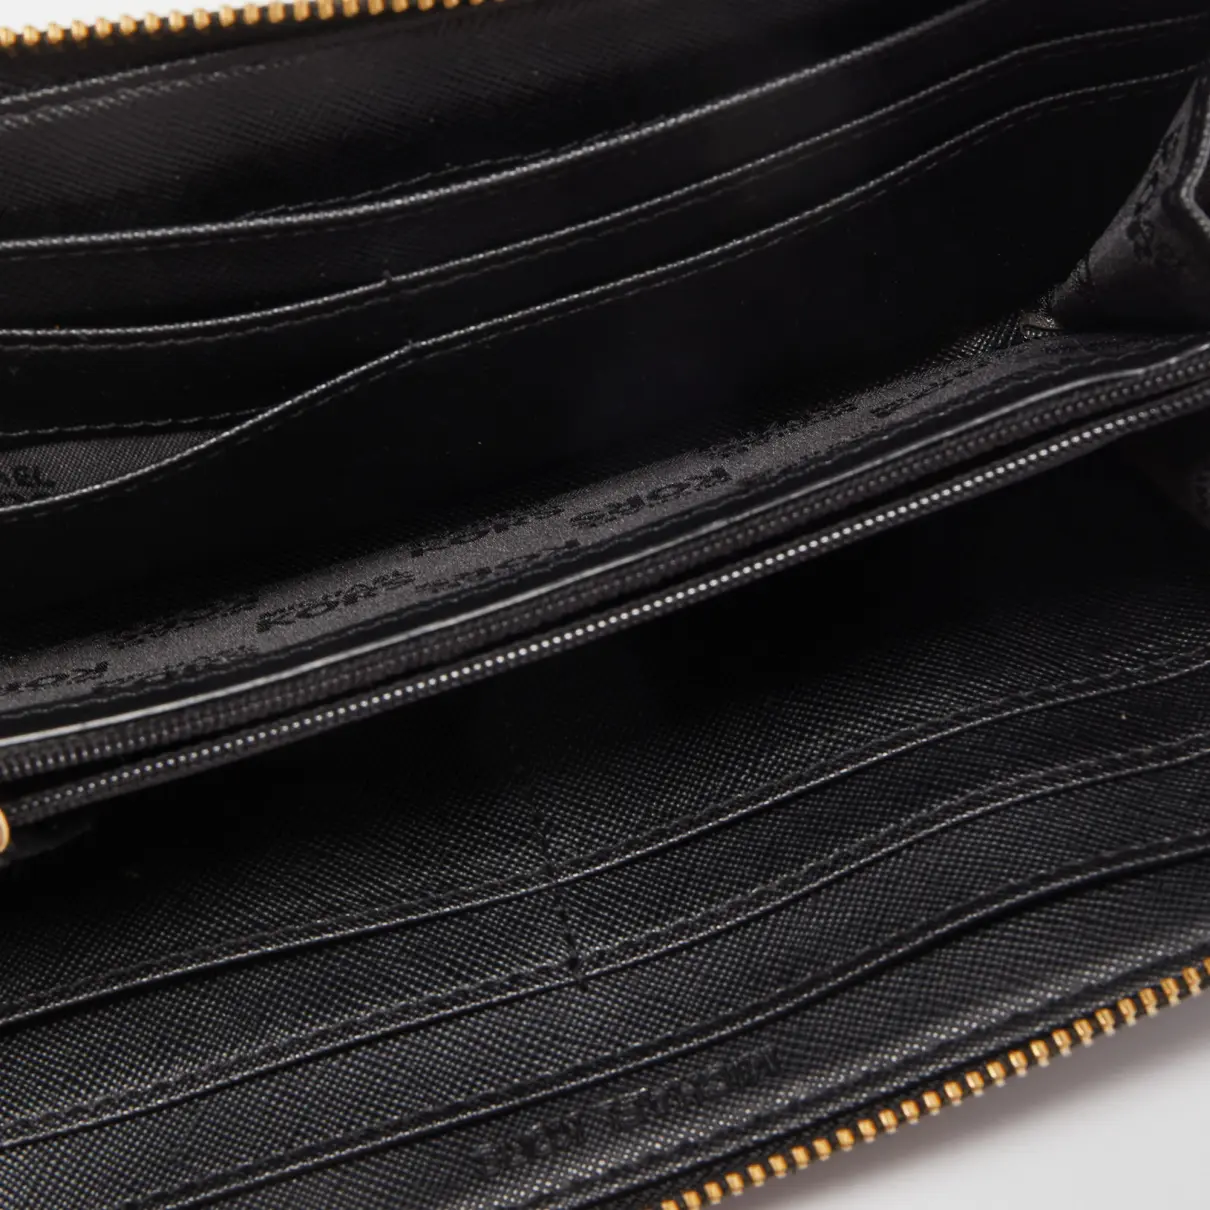 Buy Michael Kors Patent leather wallet online